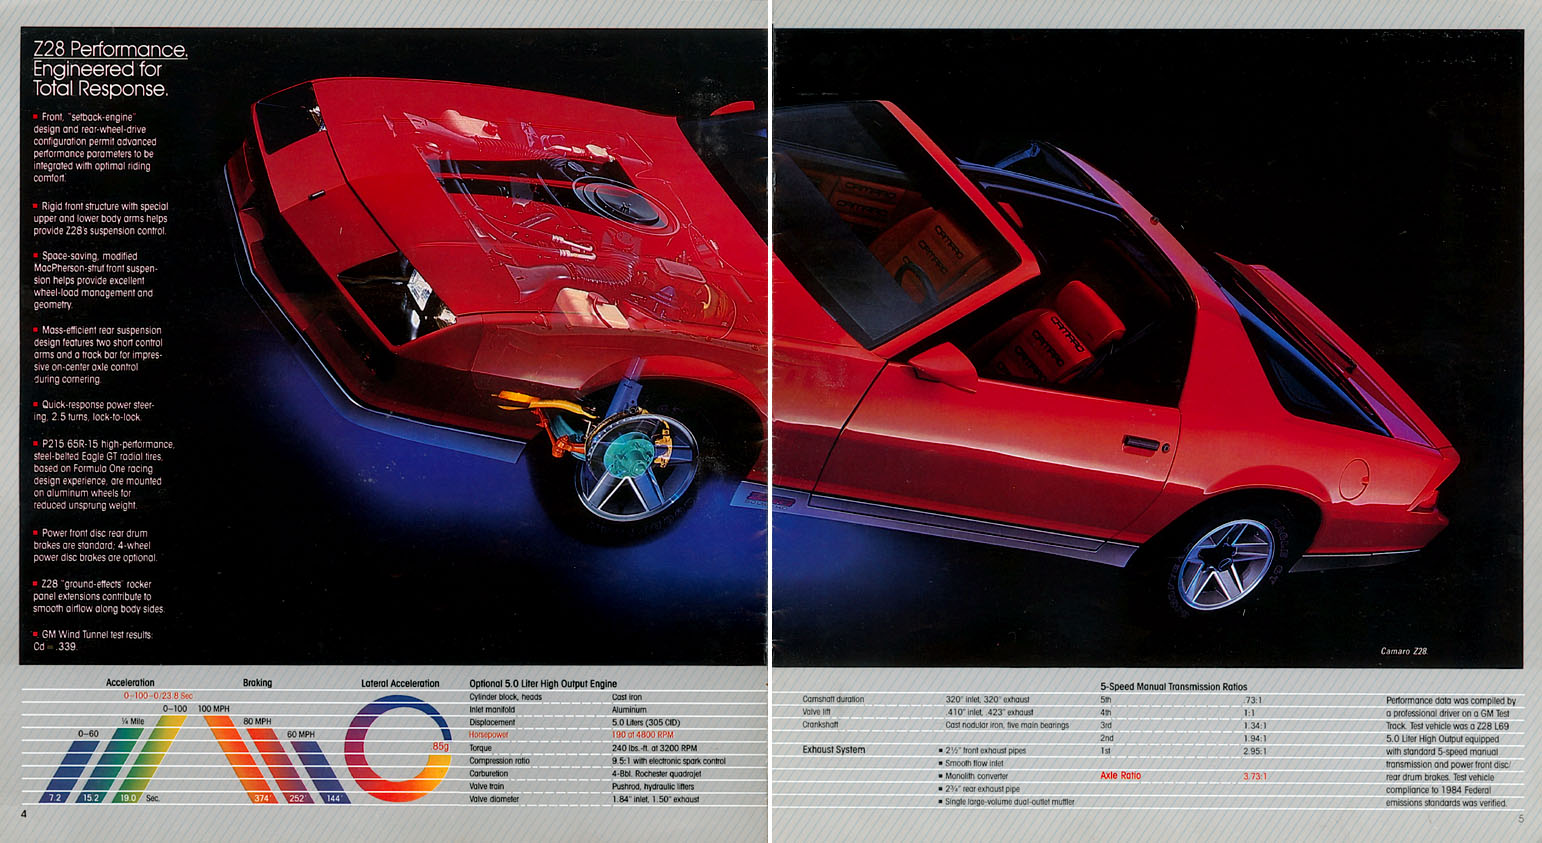 1984_Chevrolet_Camaro-03